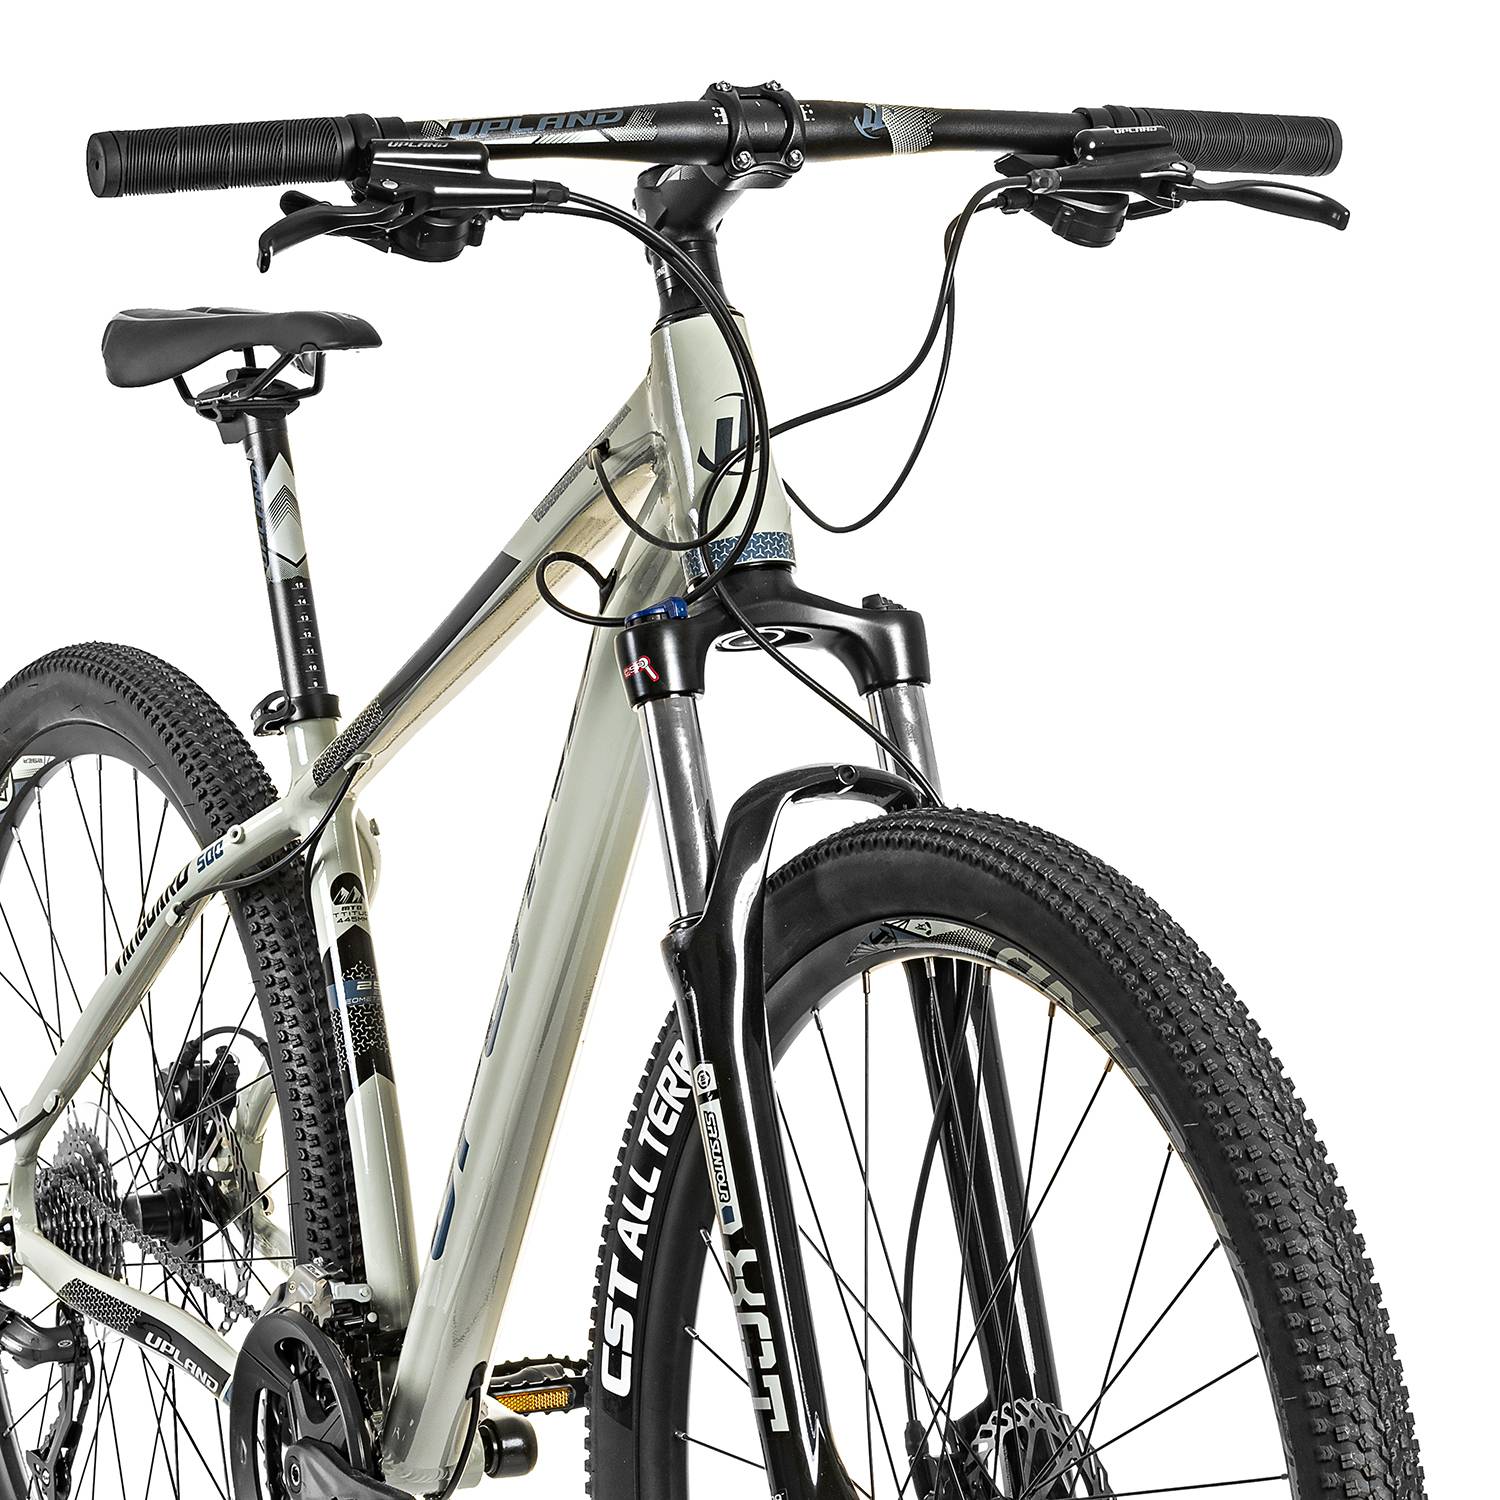 Bicicleta Upland Vanguard 500 - Bike new sport